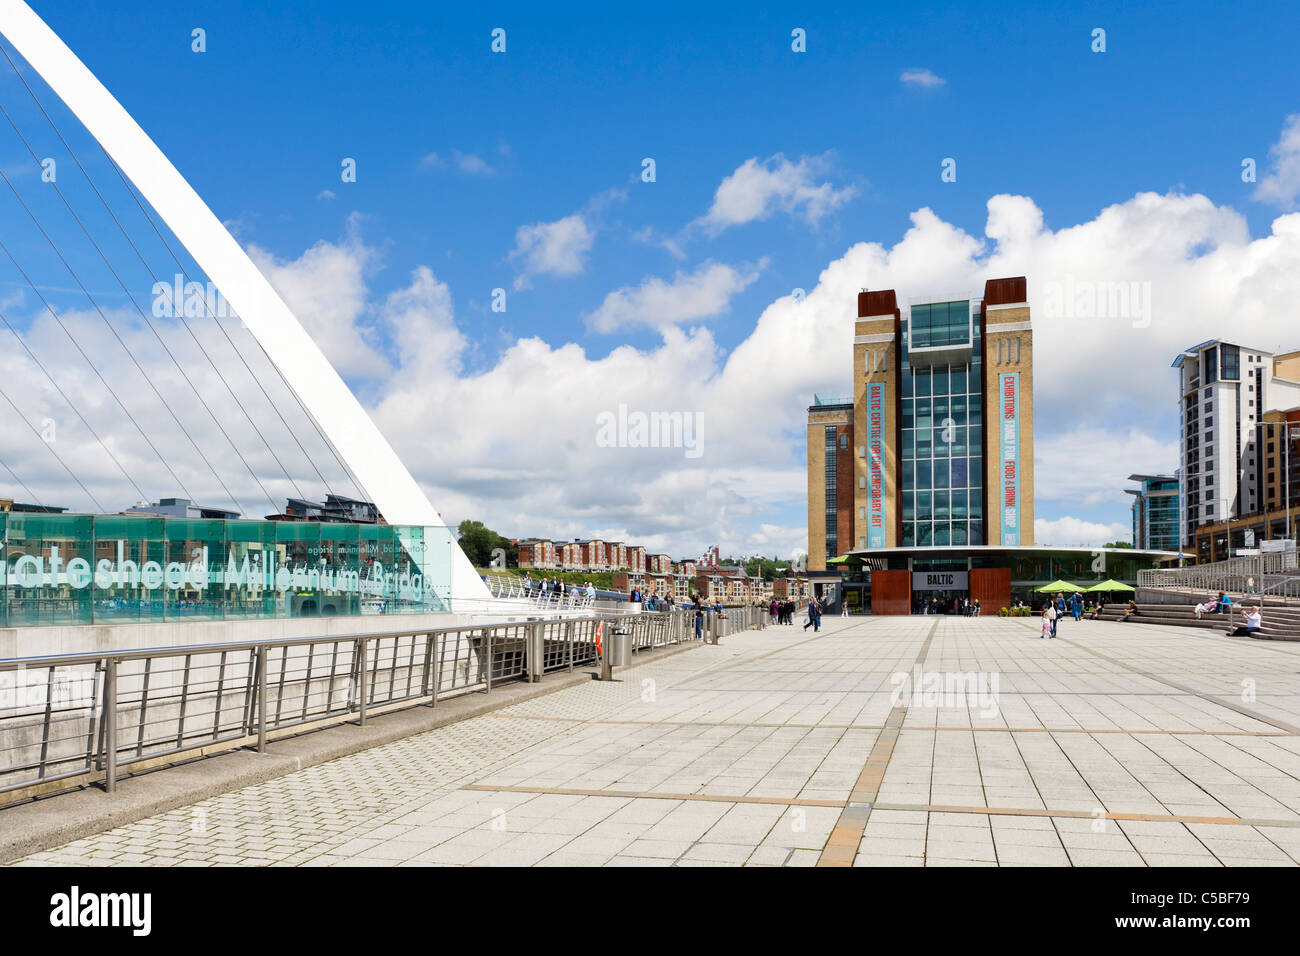 Le Millennium Bridge et Baltic Centre for Contemporary Arts, Quayside, Newcastle upon Tyne, Tyne and Wear, Royaume-Uni Banque D'Images